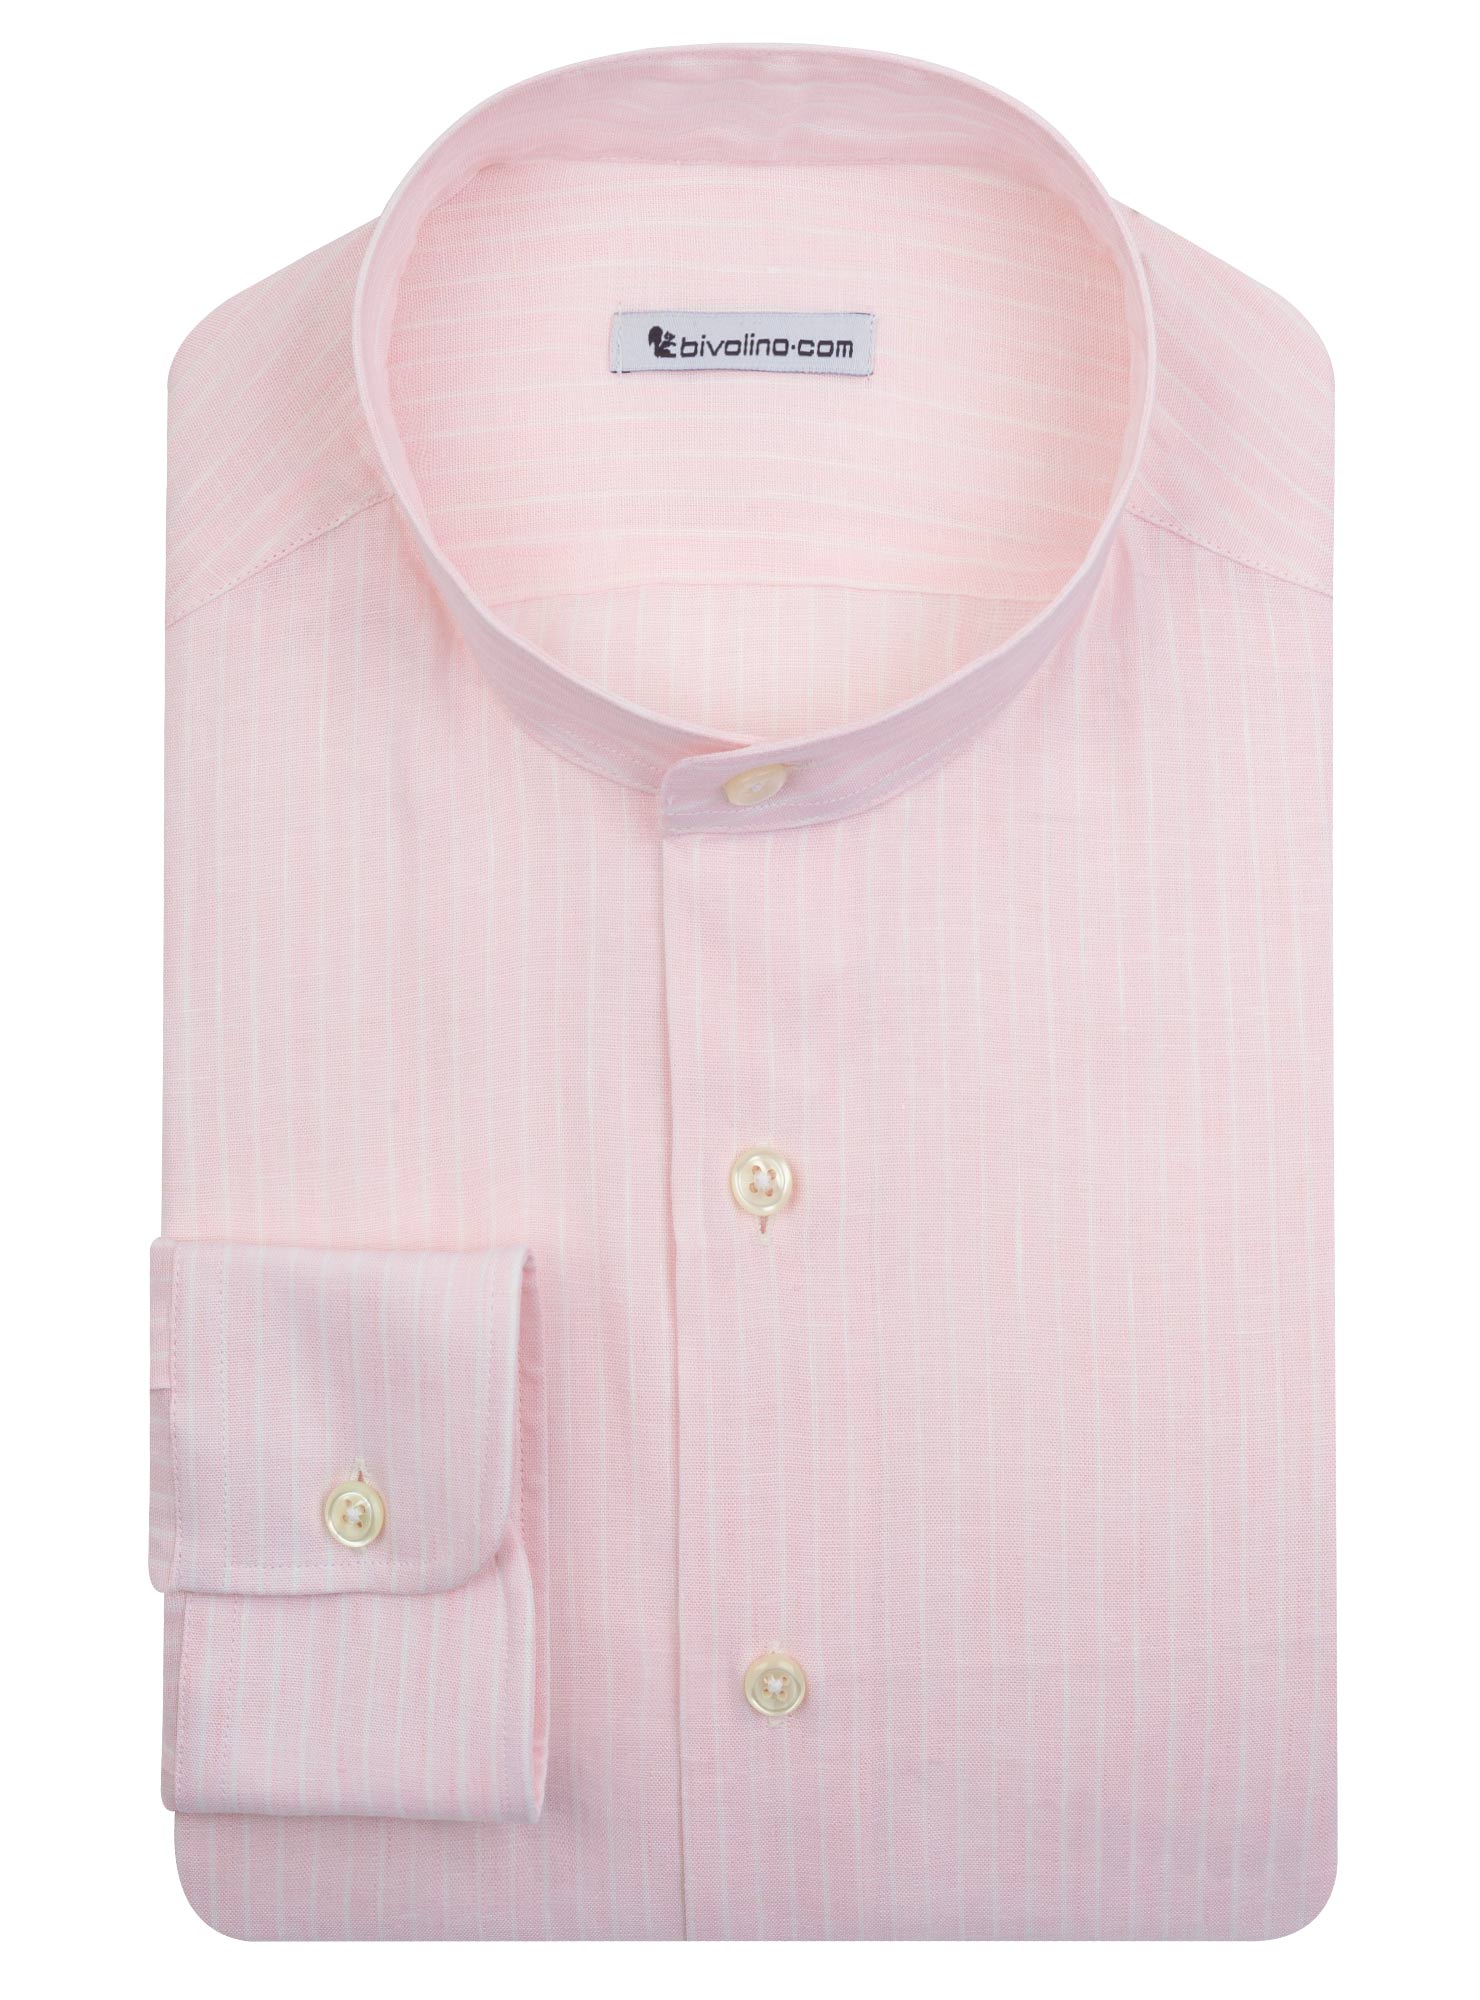 TARANTO - pink pinstripe linen shirt - NEON 9